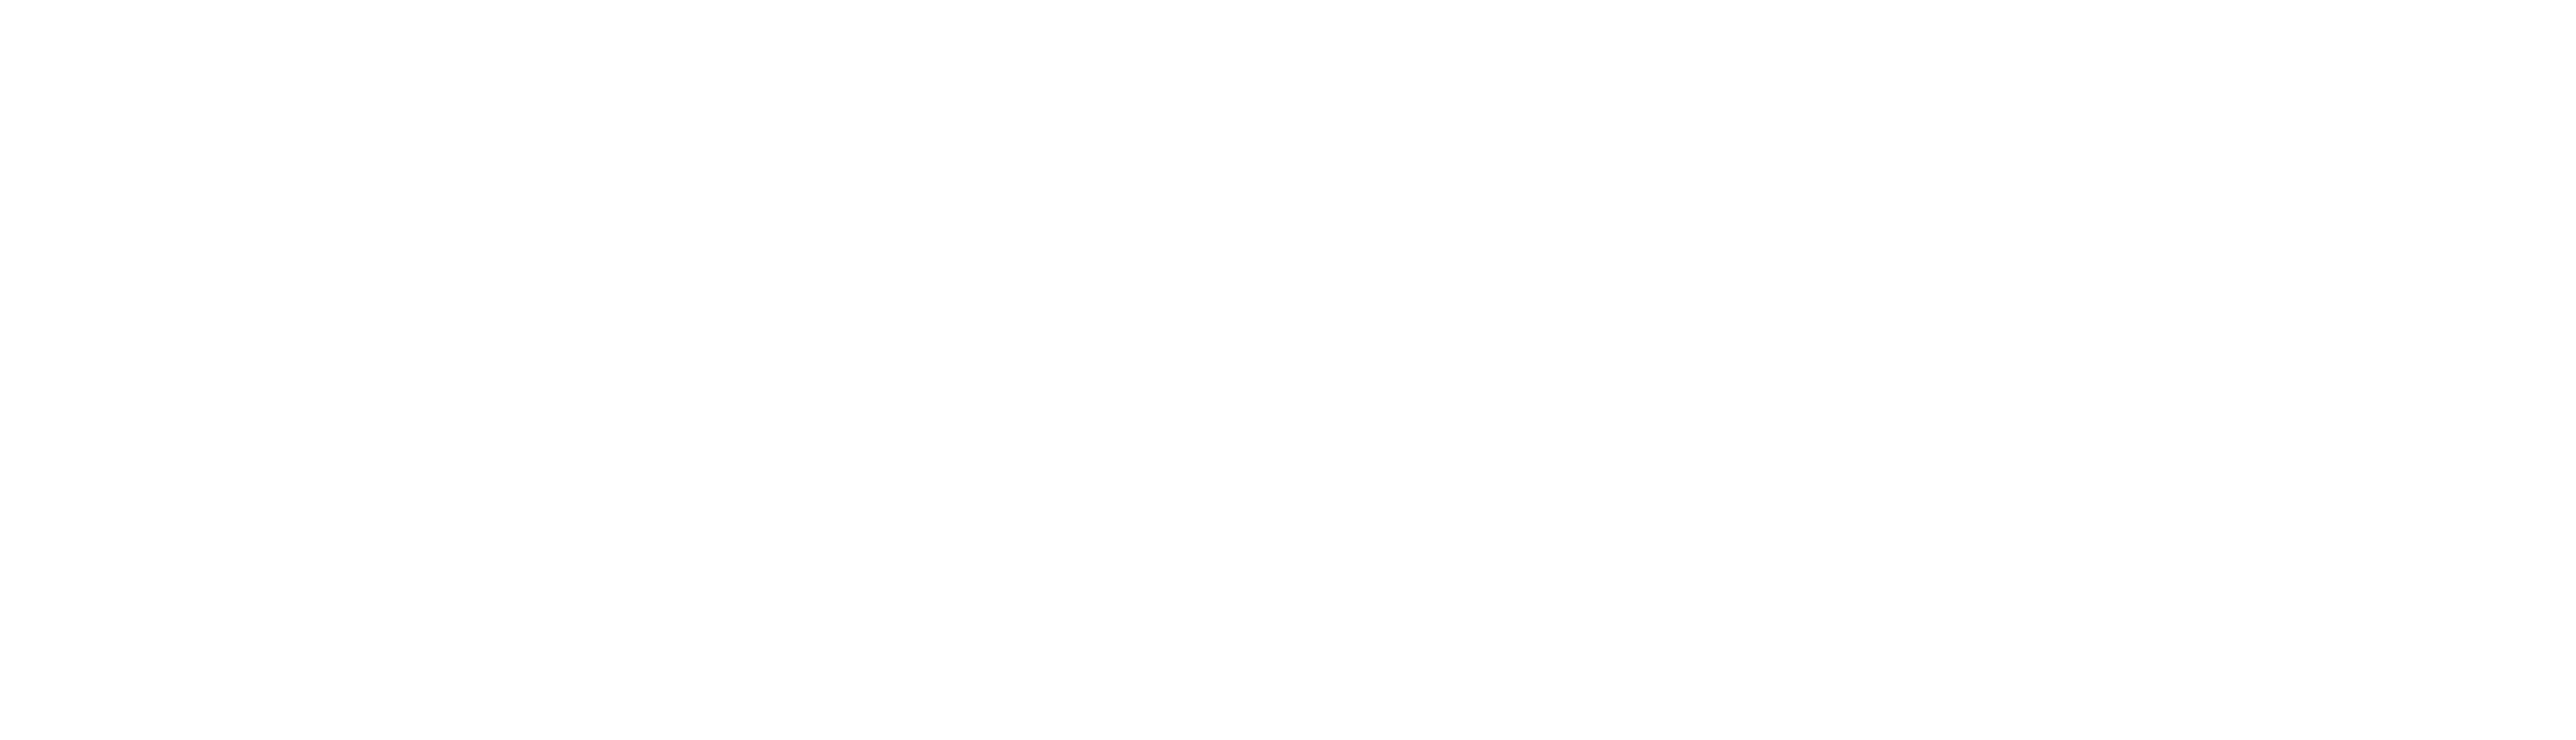 Ecotrust logo white